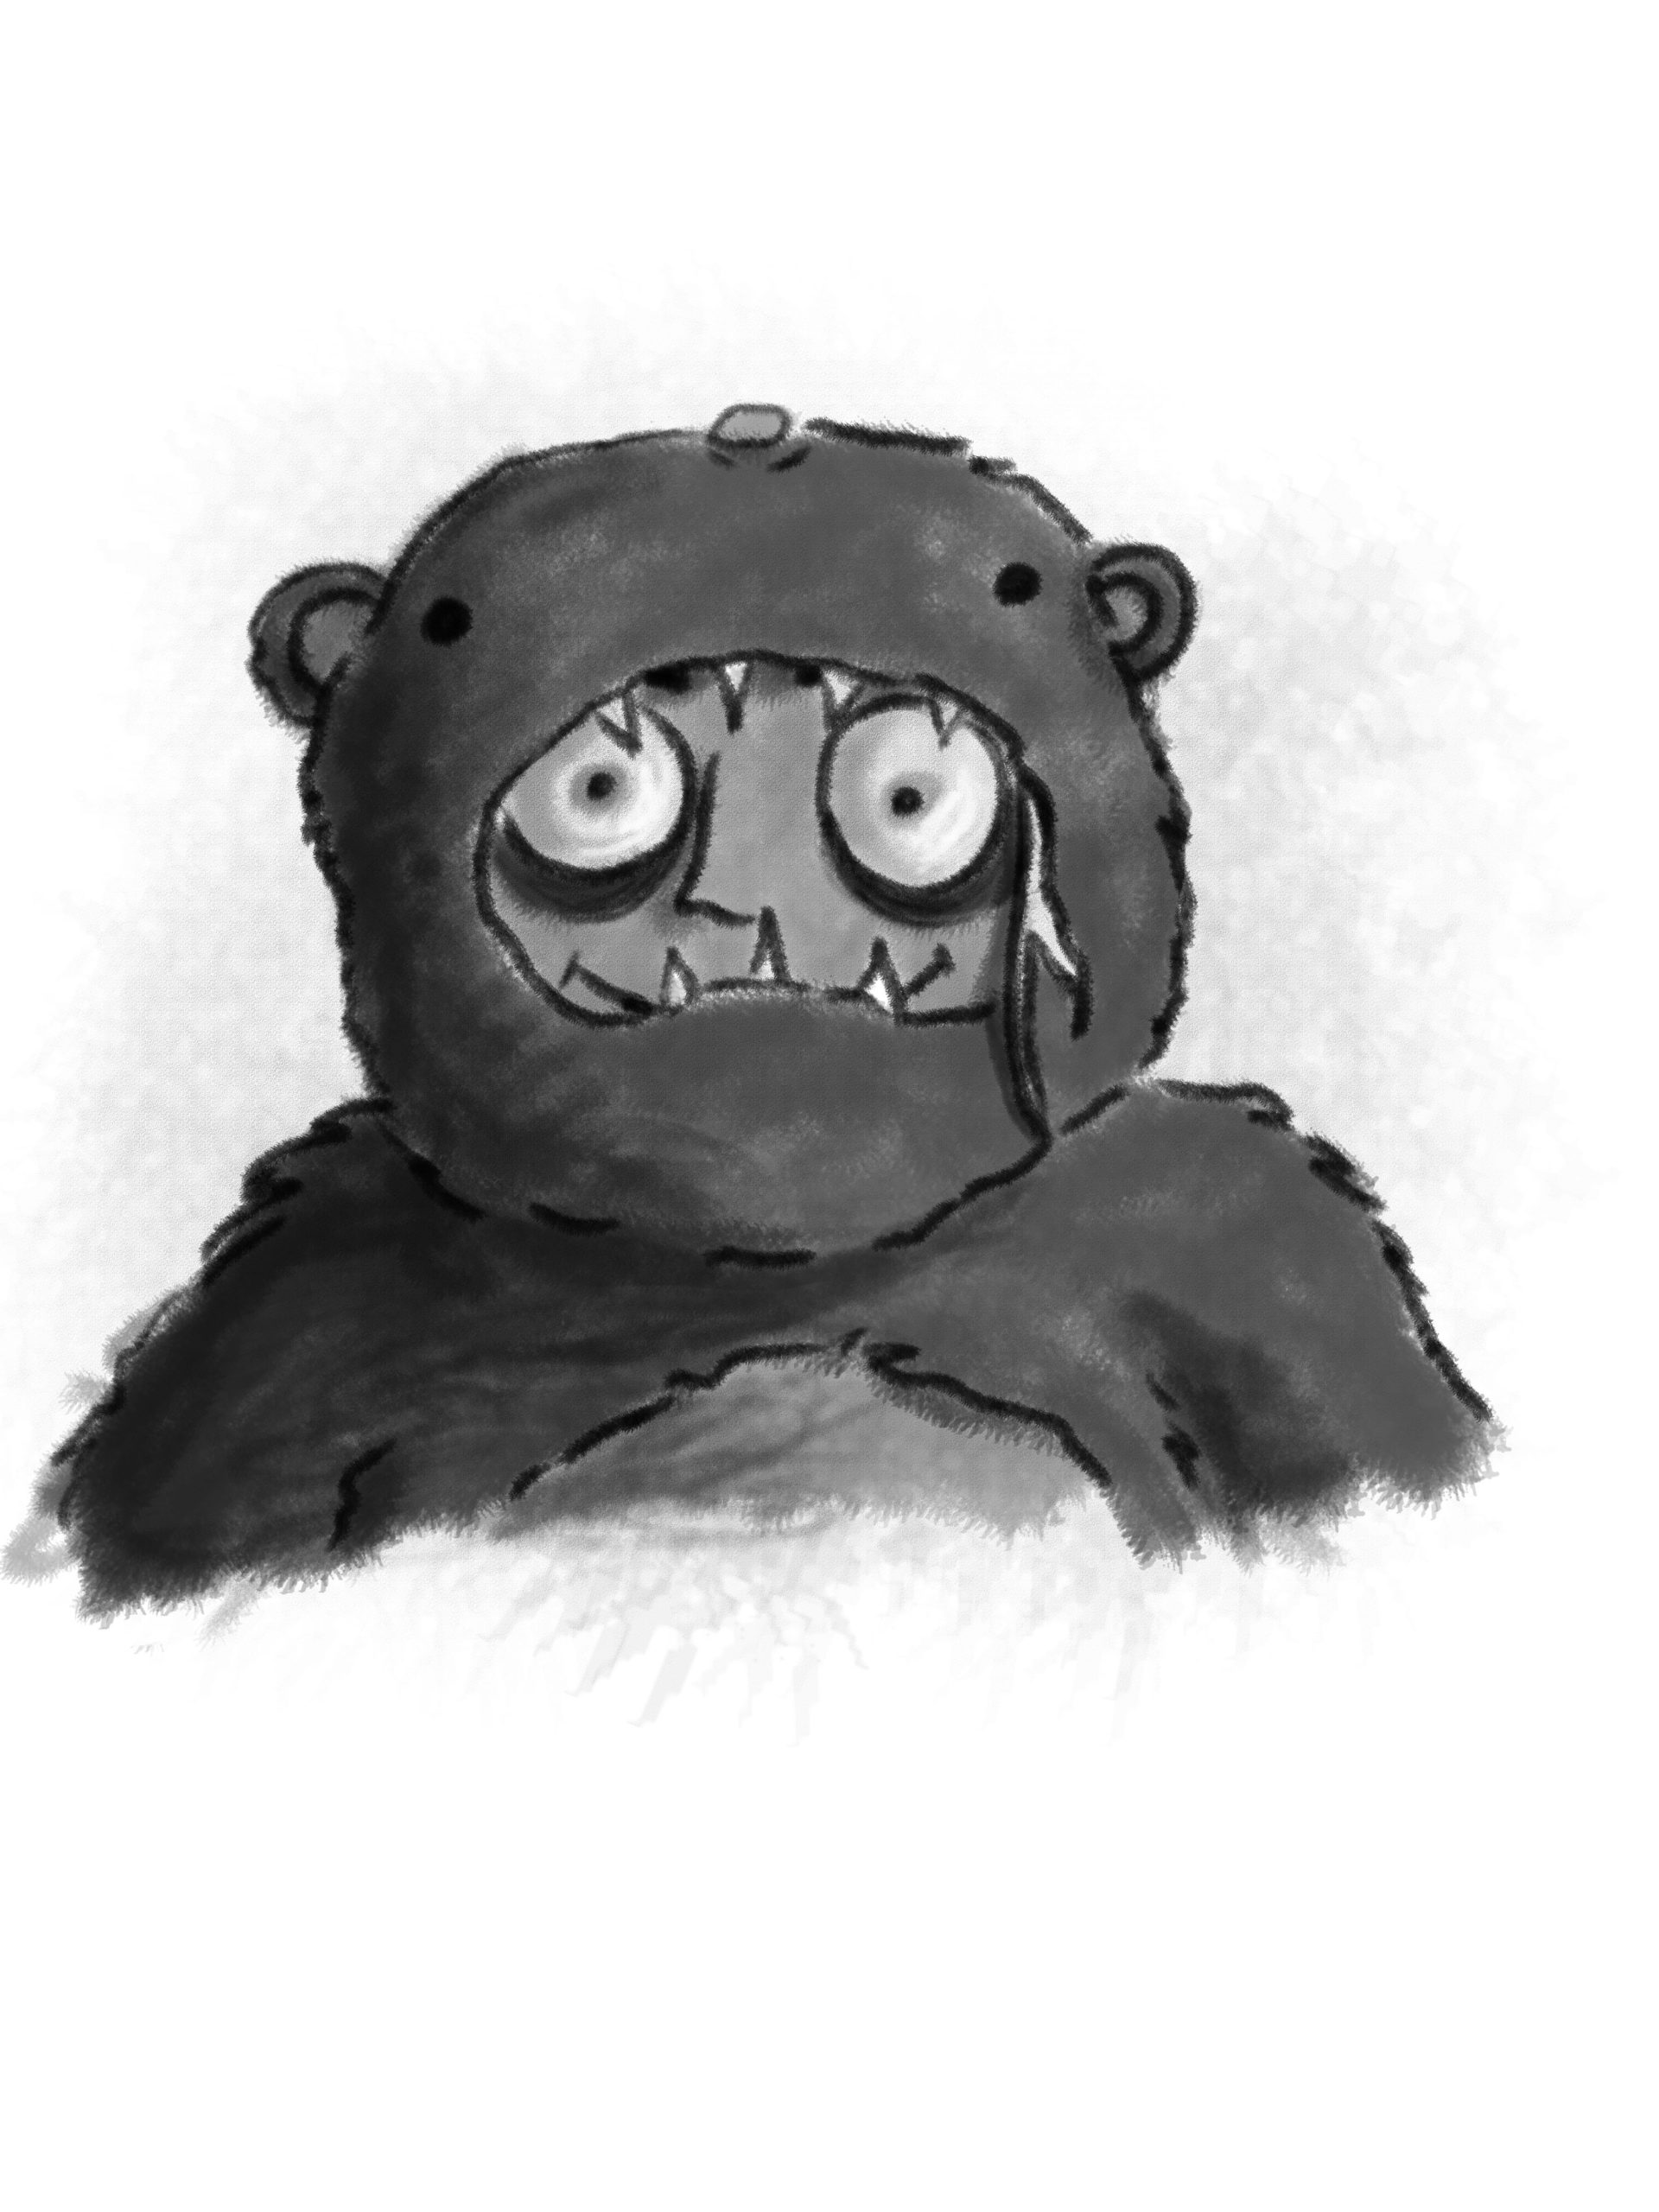 Zombie in a bear suit.